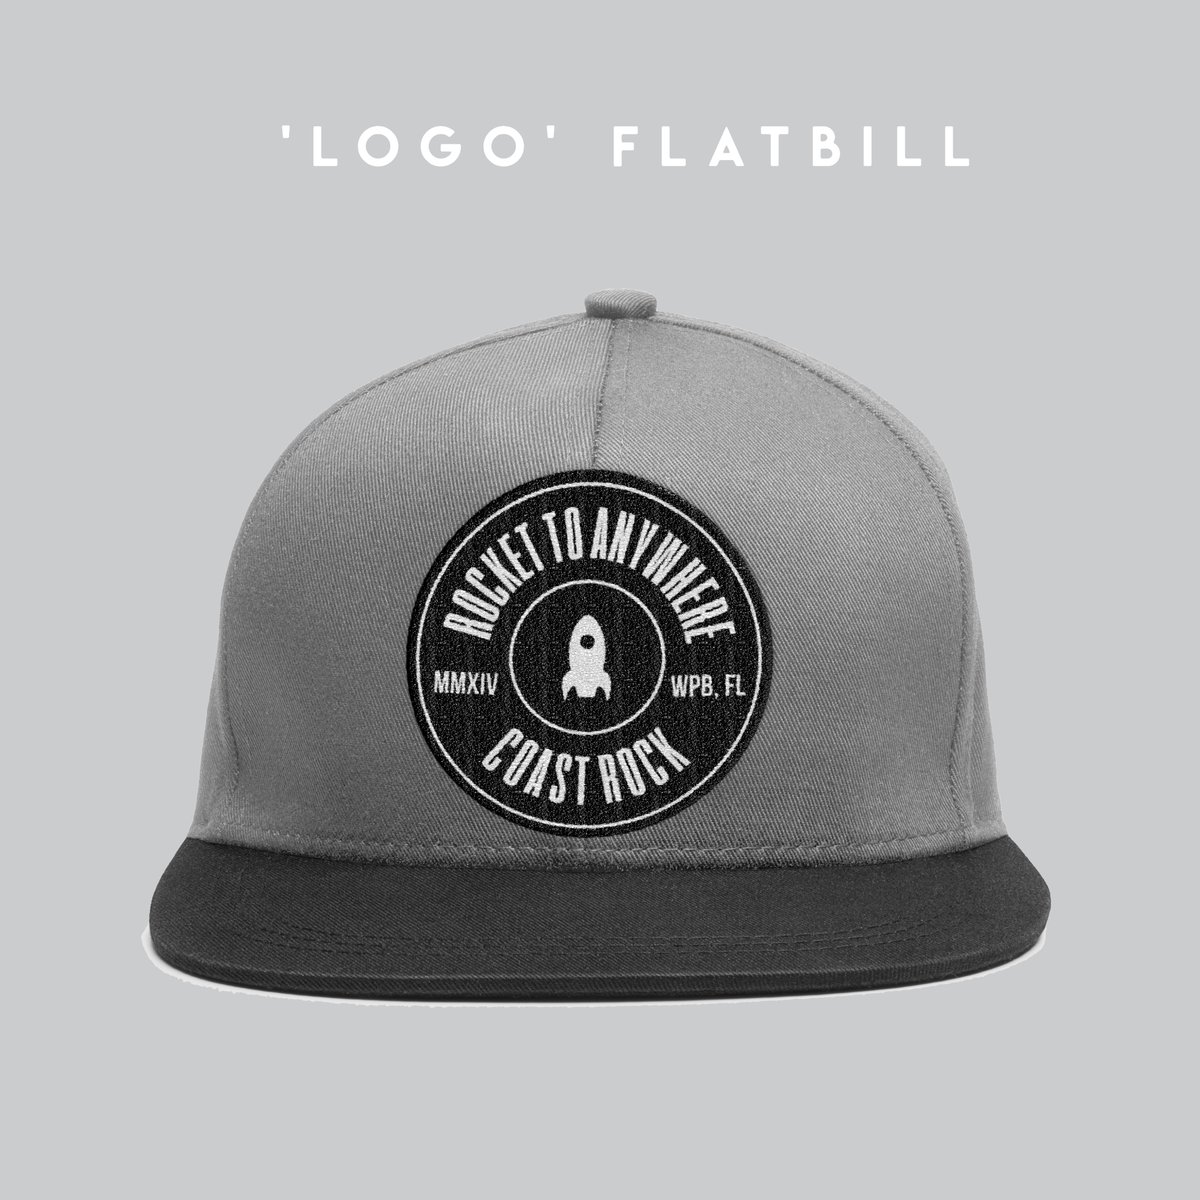 Image of 'LOGO' FLATBILL HAT